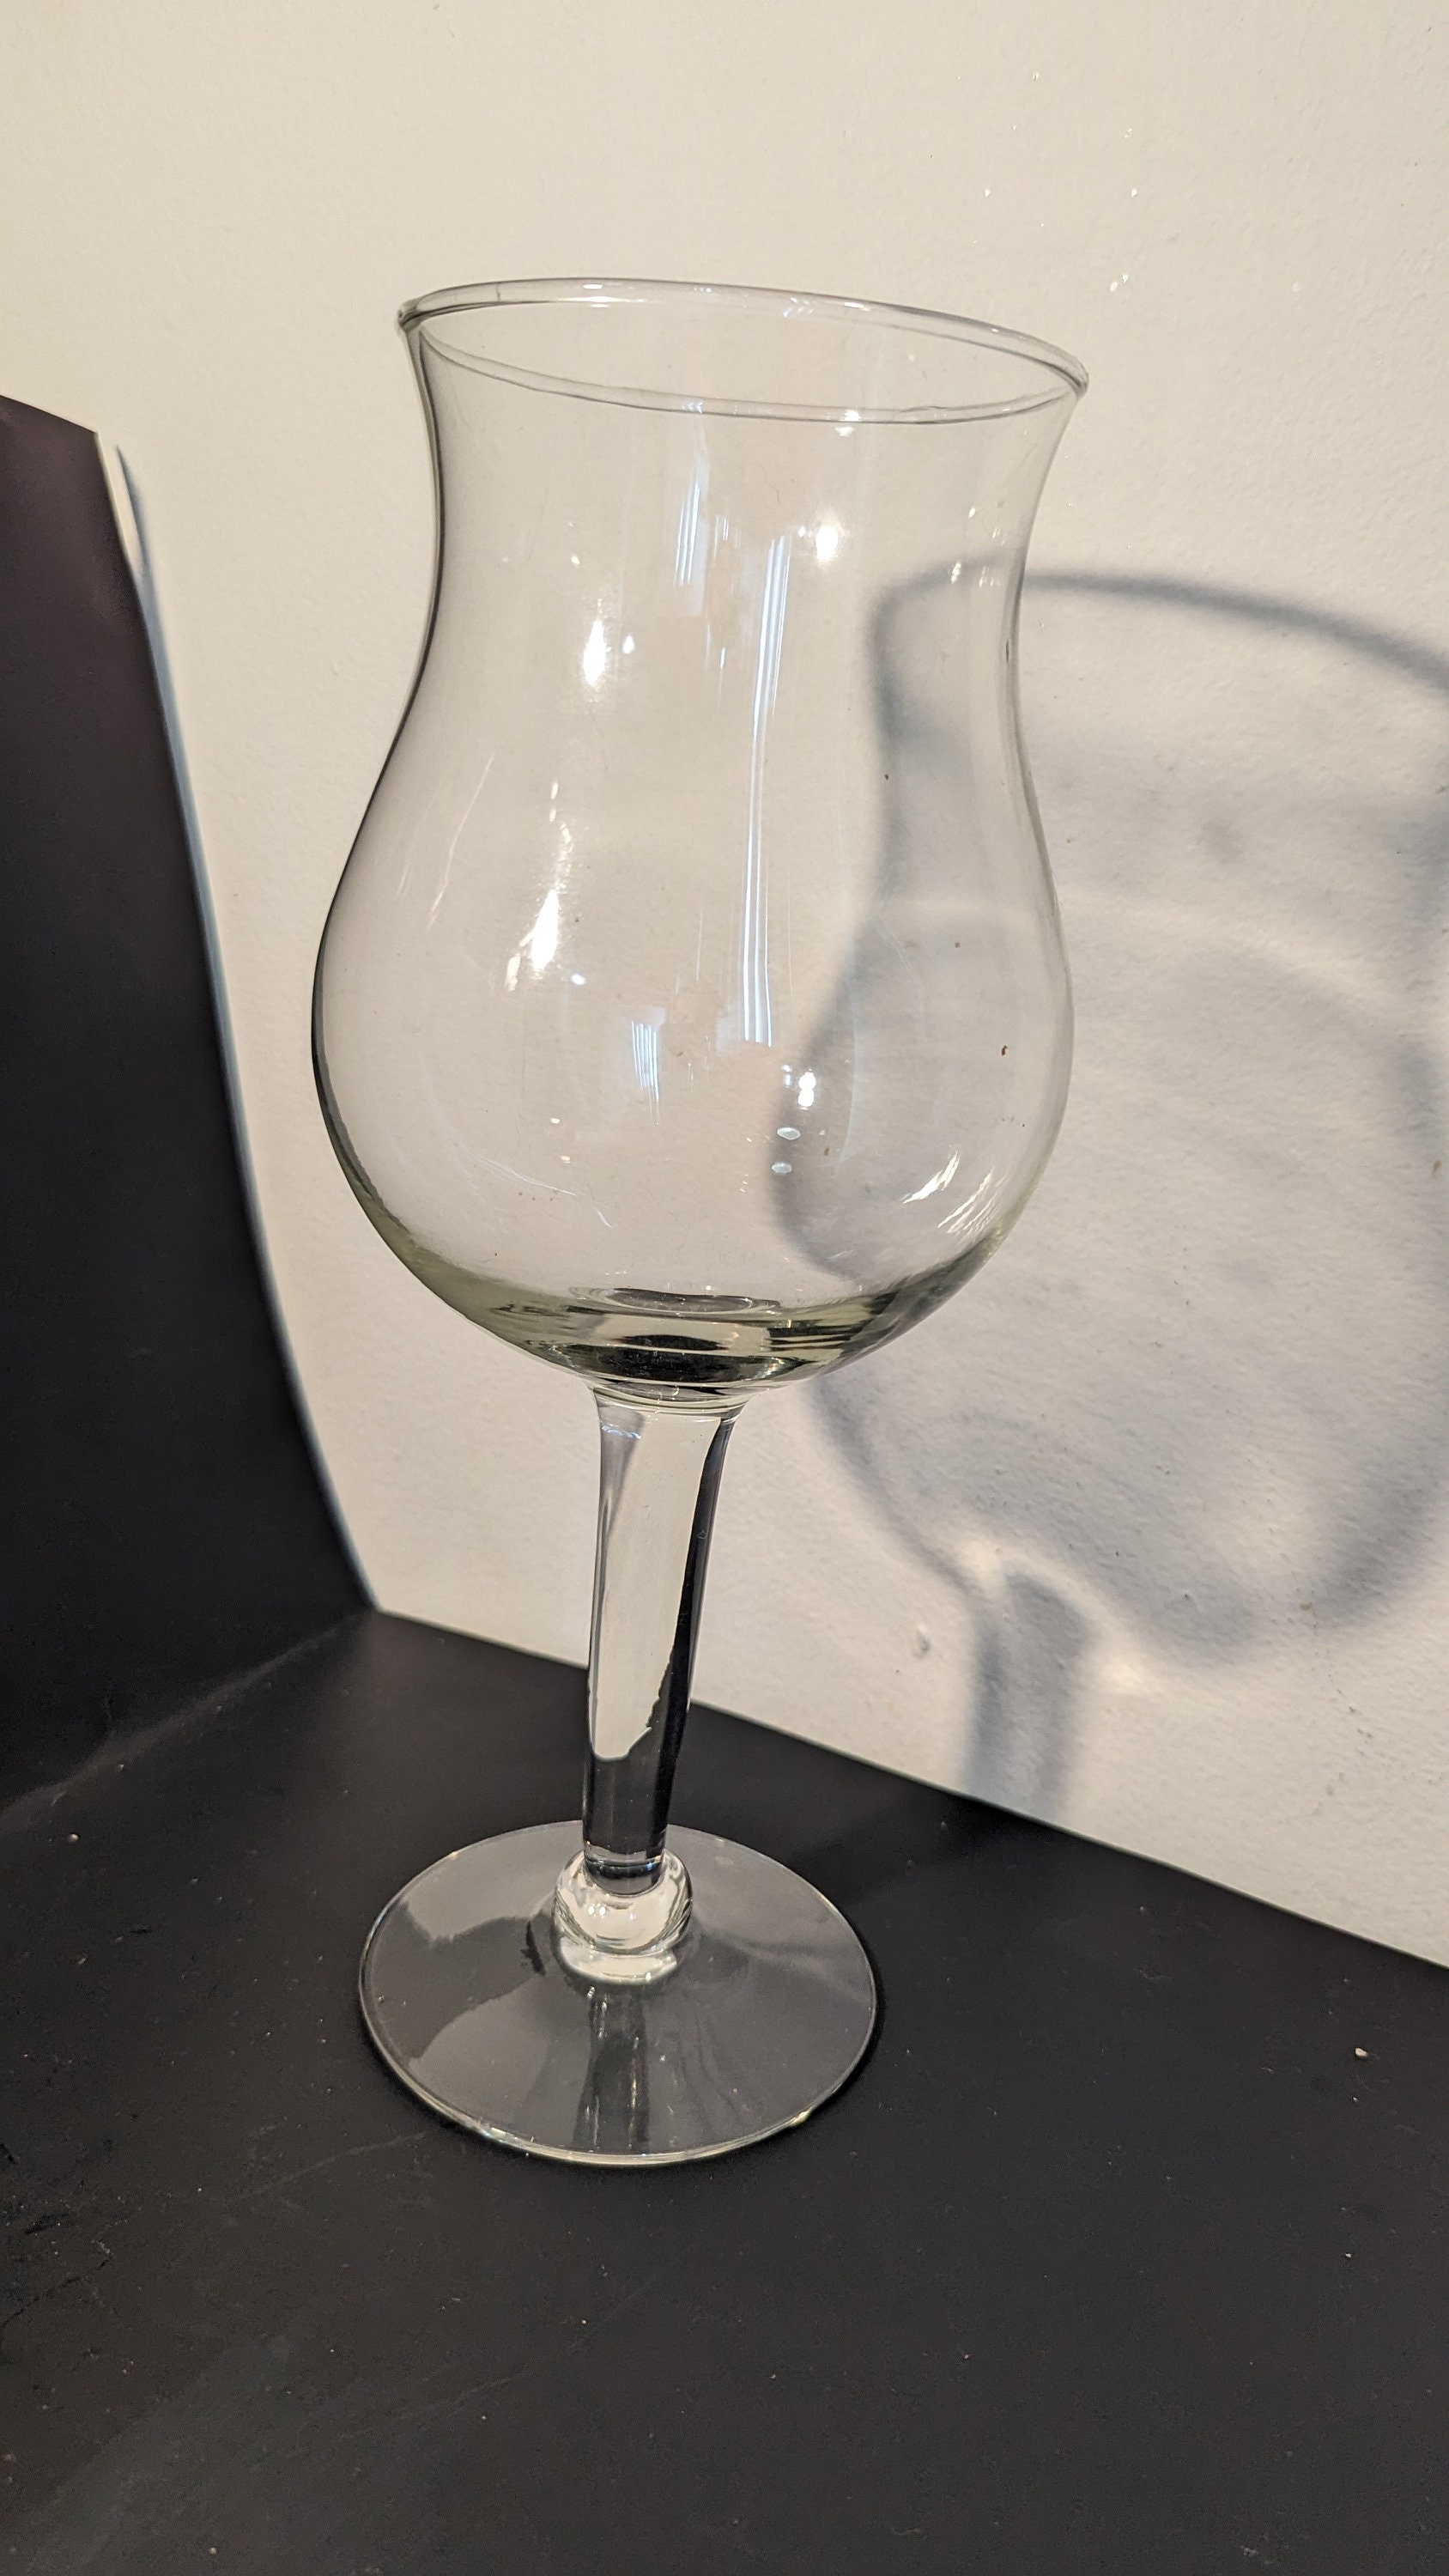 Oversized wine glass : r/shittyaquariums